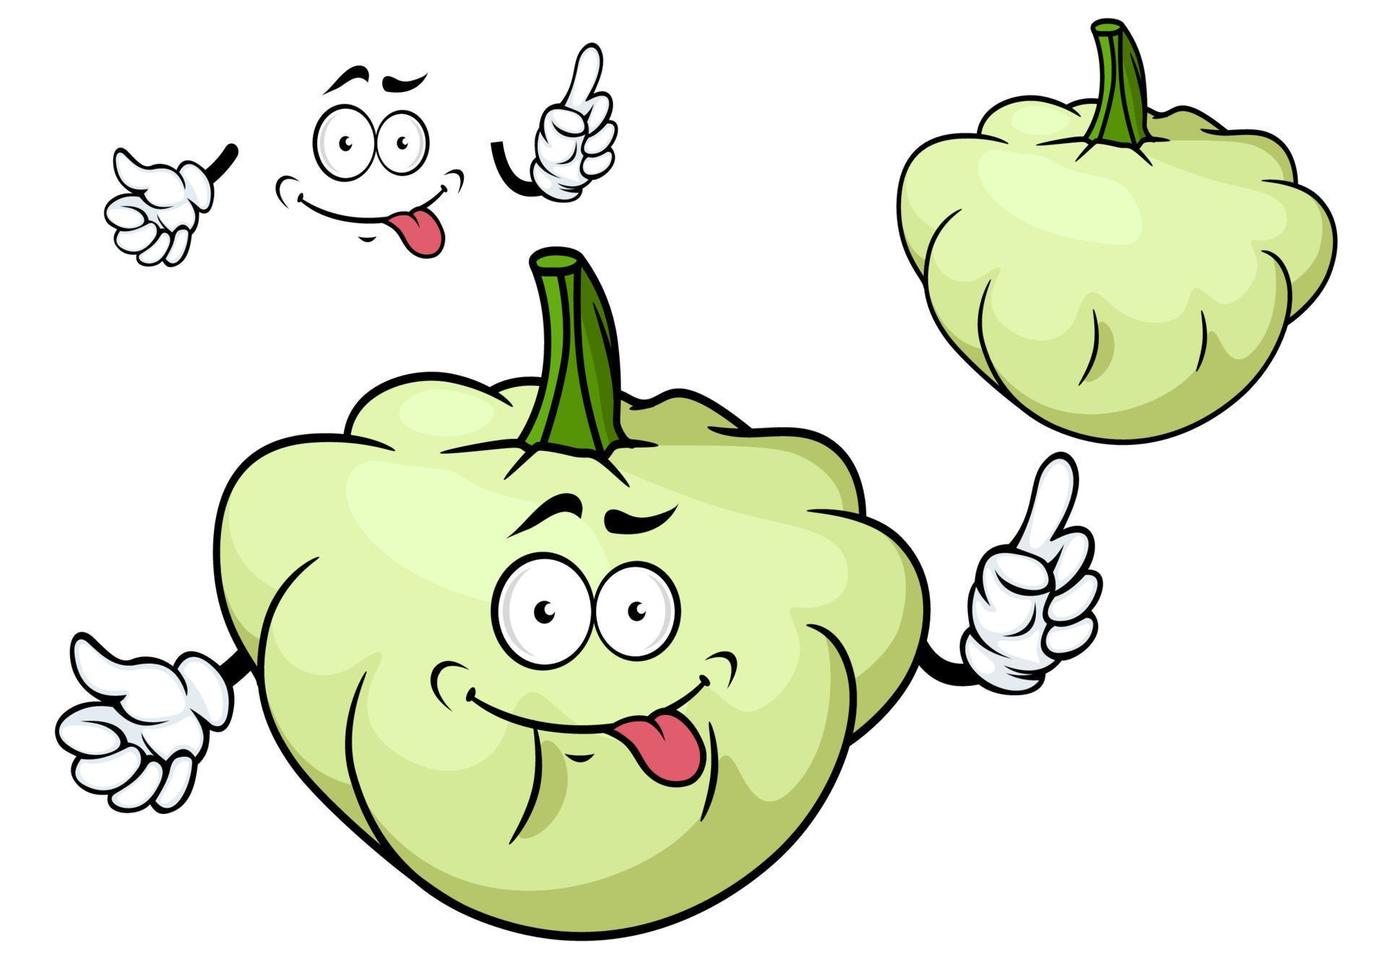 Cartoon pattypan squash vegetable character vector